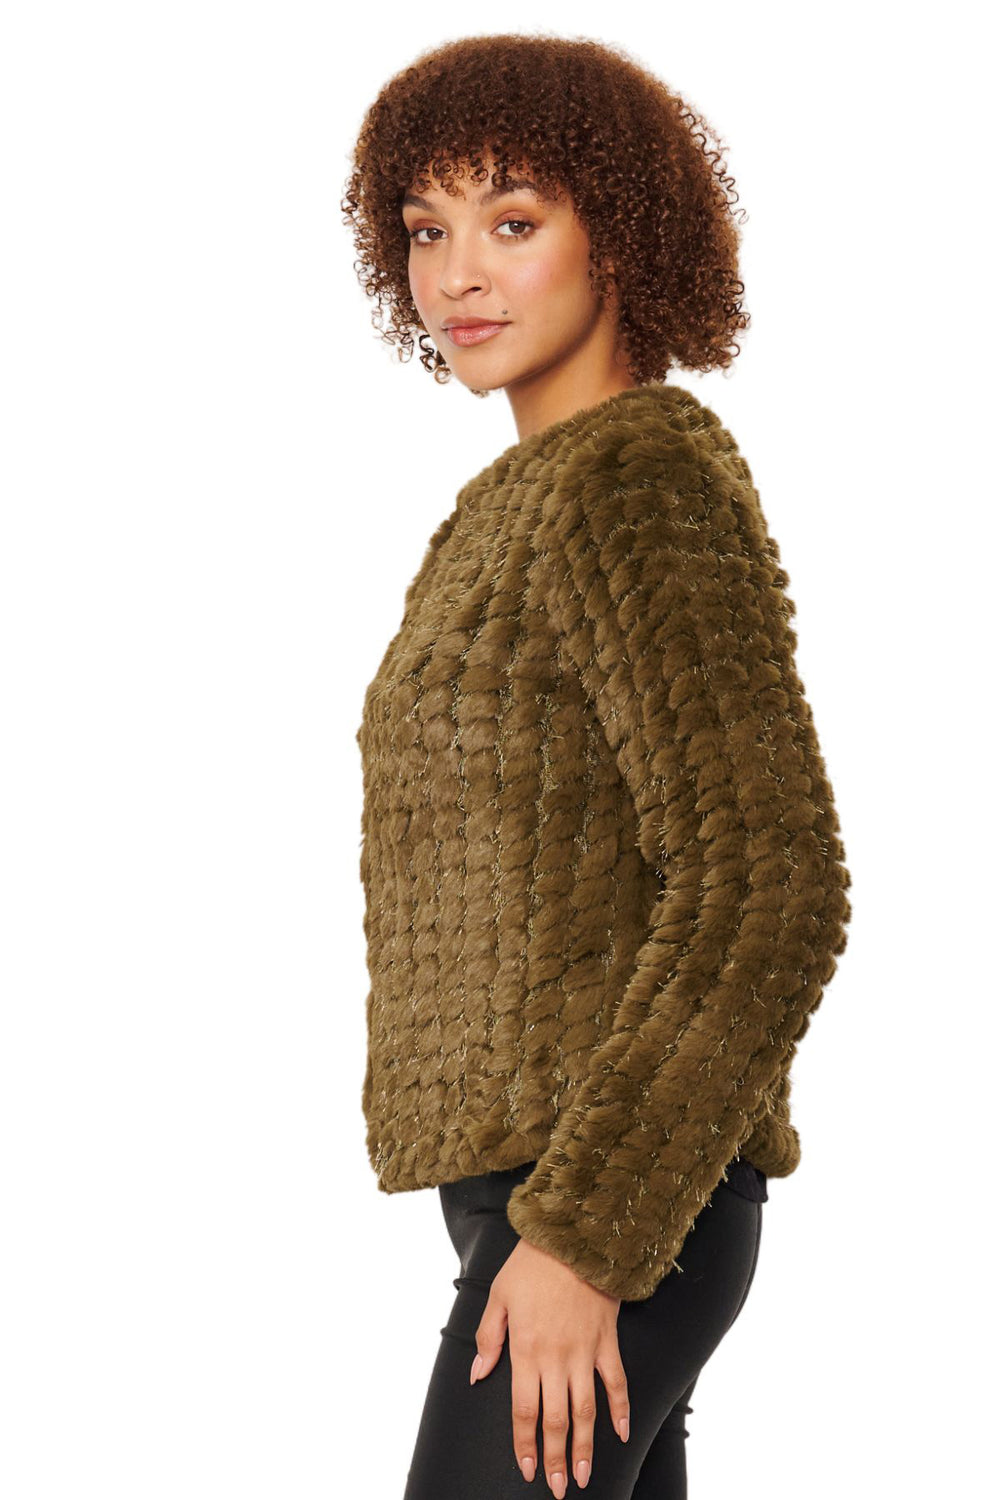 Woman wearing a brown Amanda Jacket by Caju